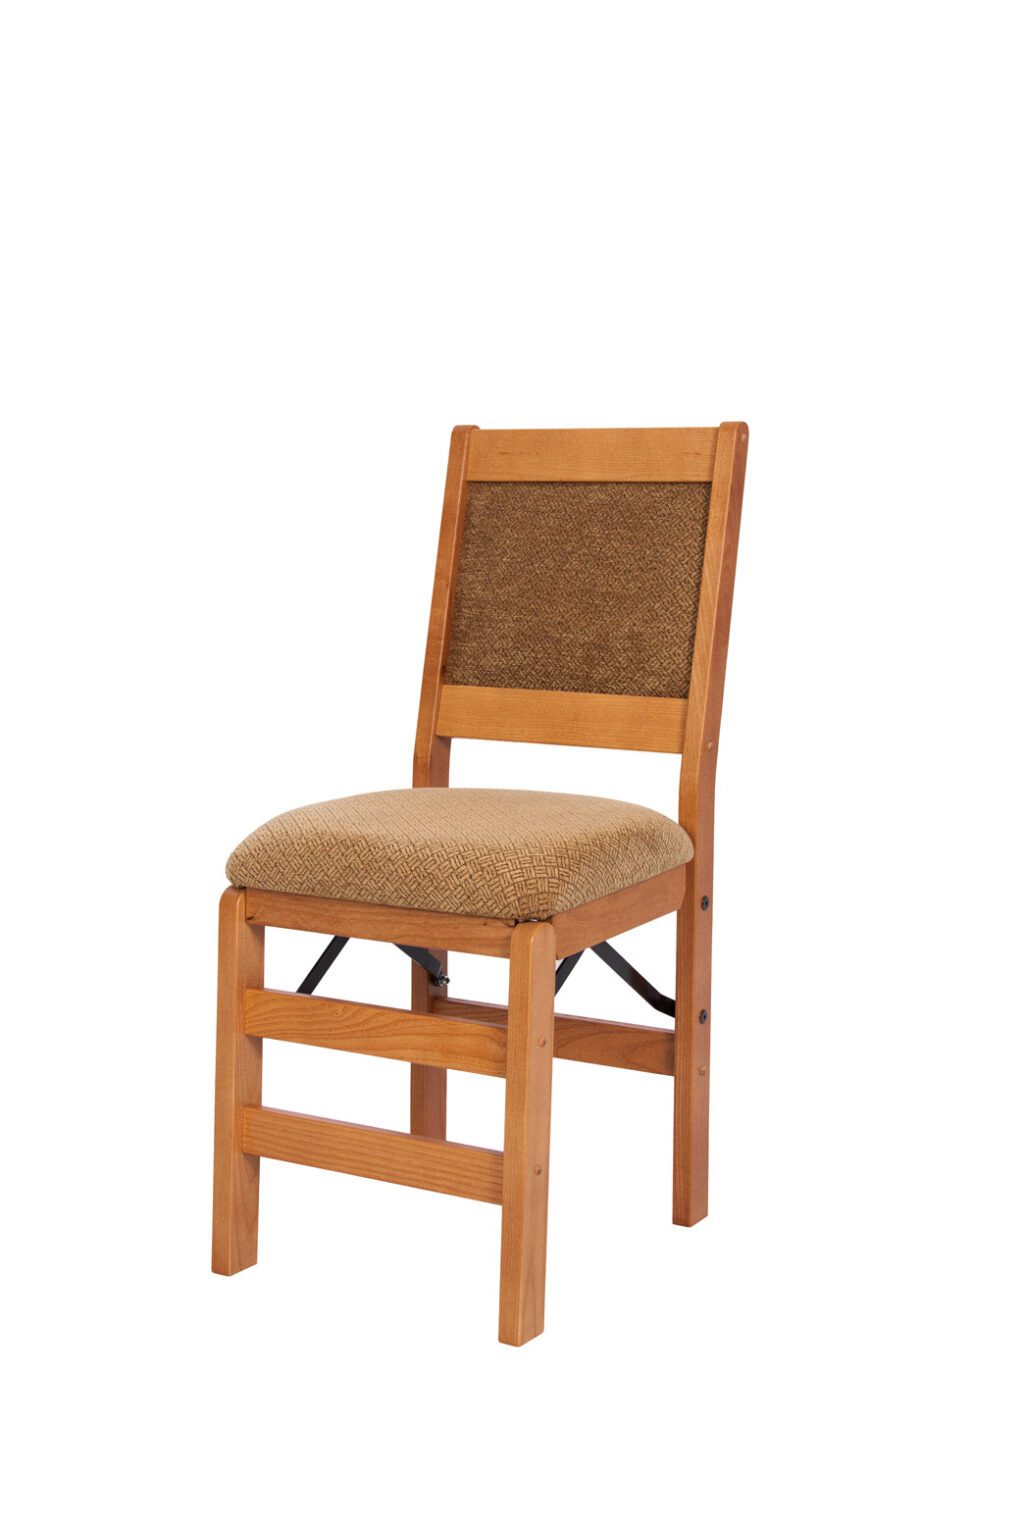 Folding Chair 01 01 Copy 1024x1536 